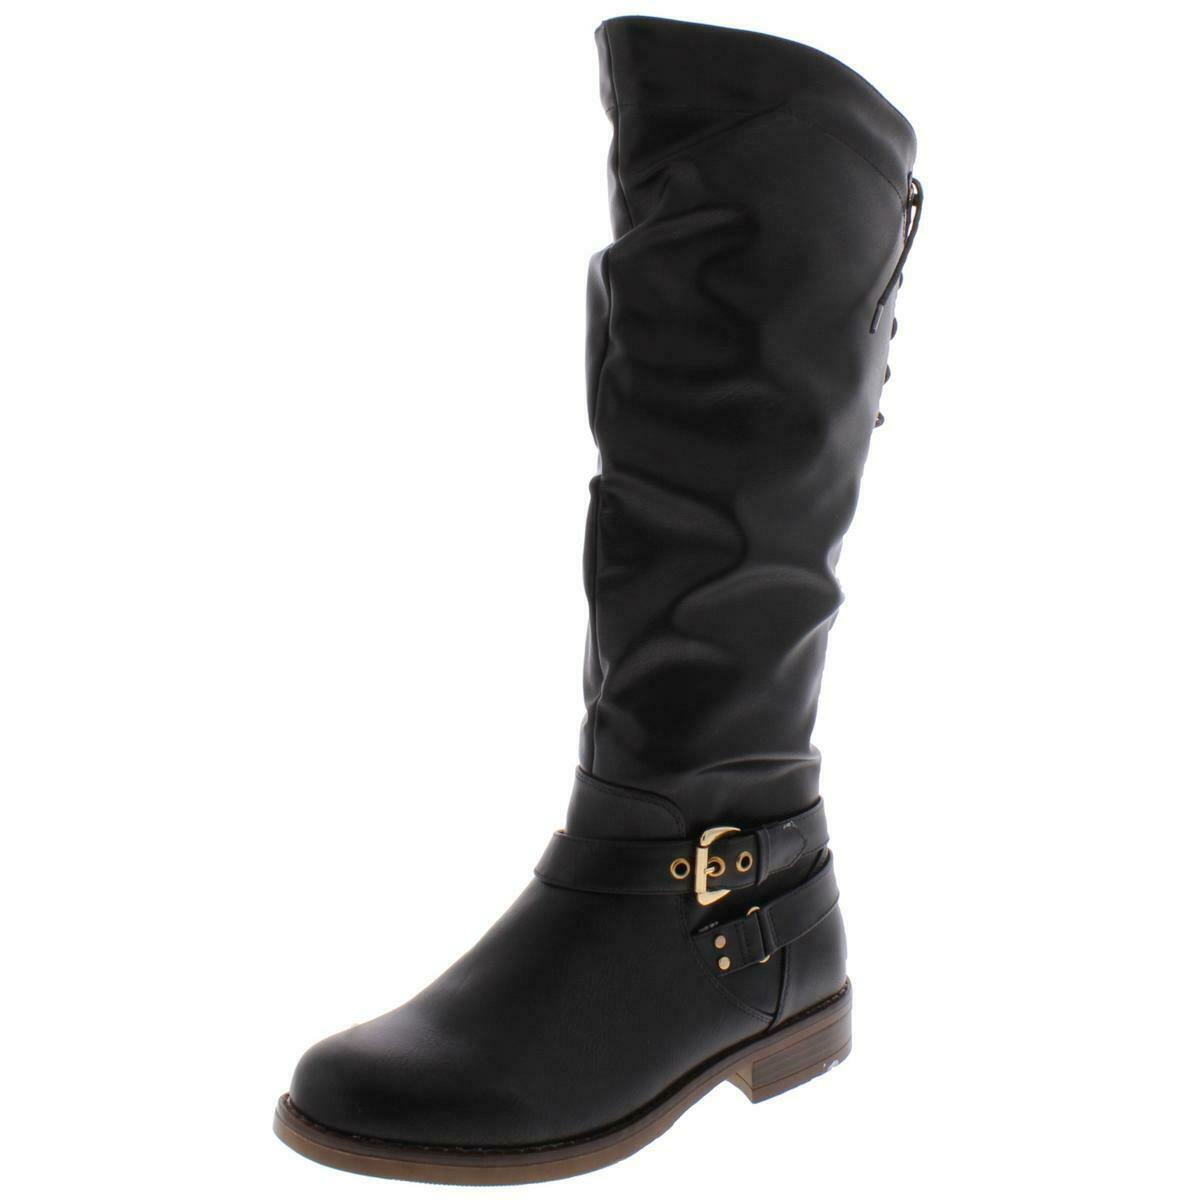 XOXO Womens Montclair Black Lace Up Riding Boots Shoes 9 Medium (B,M) BHFO 8475